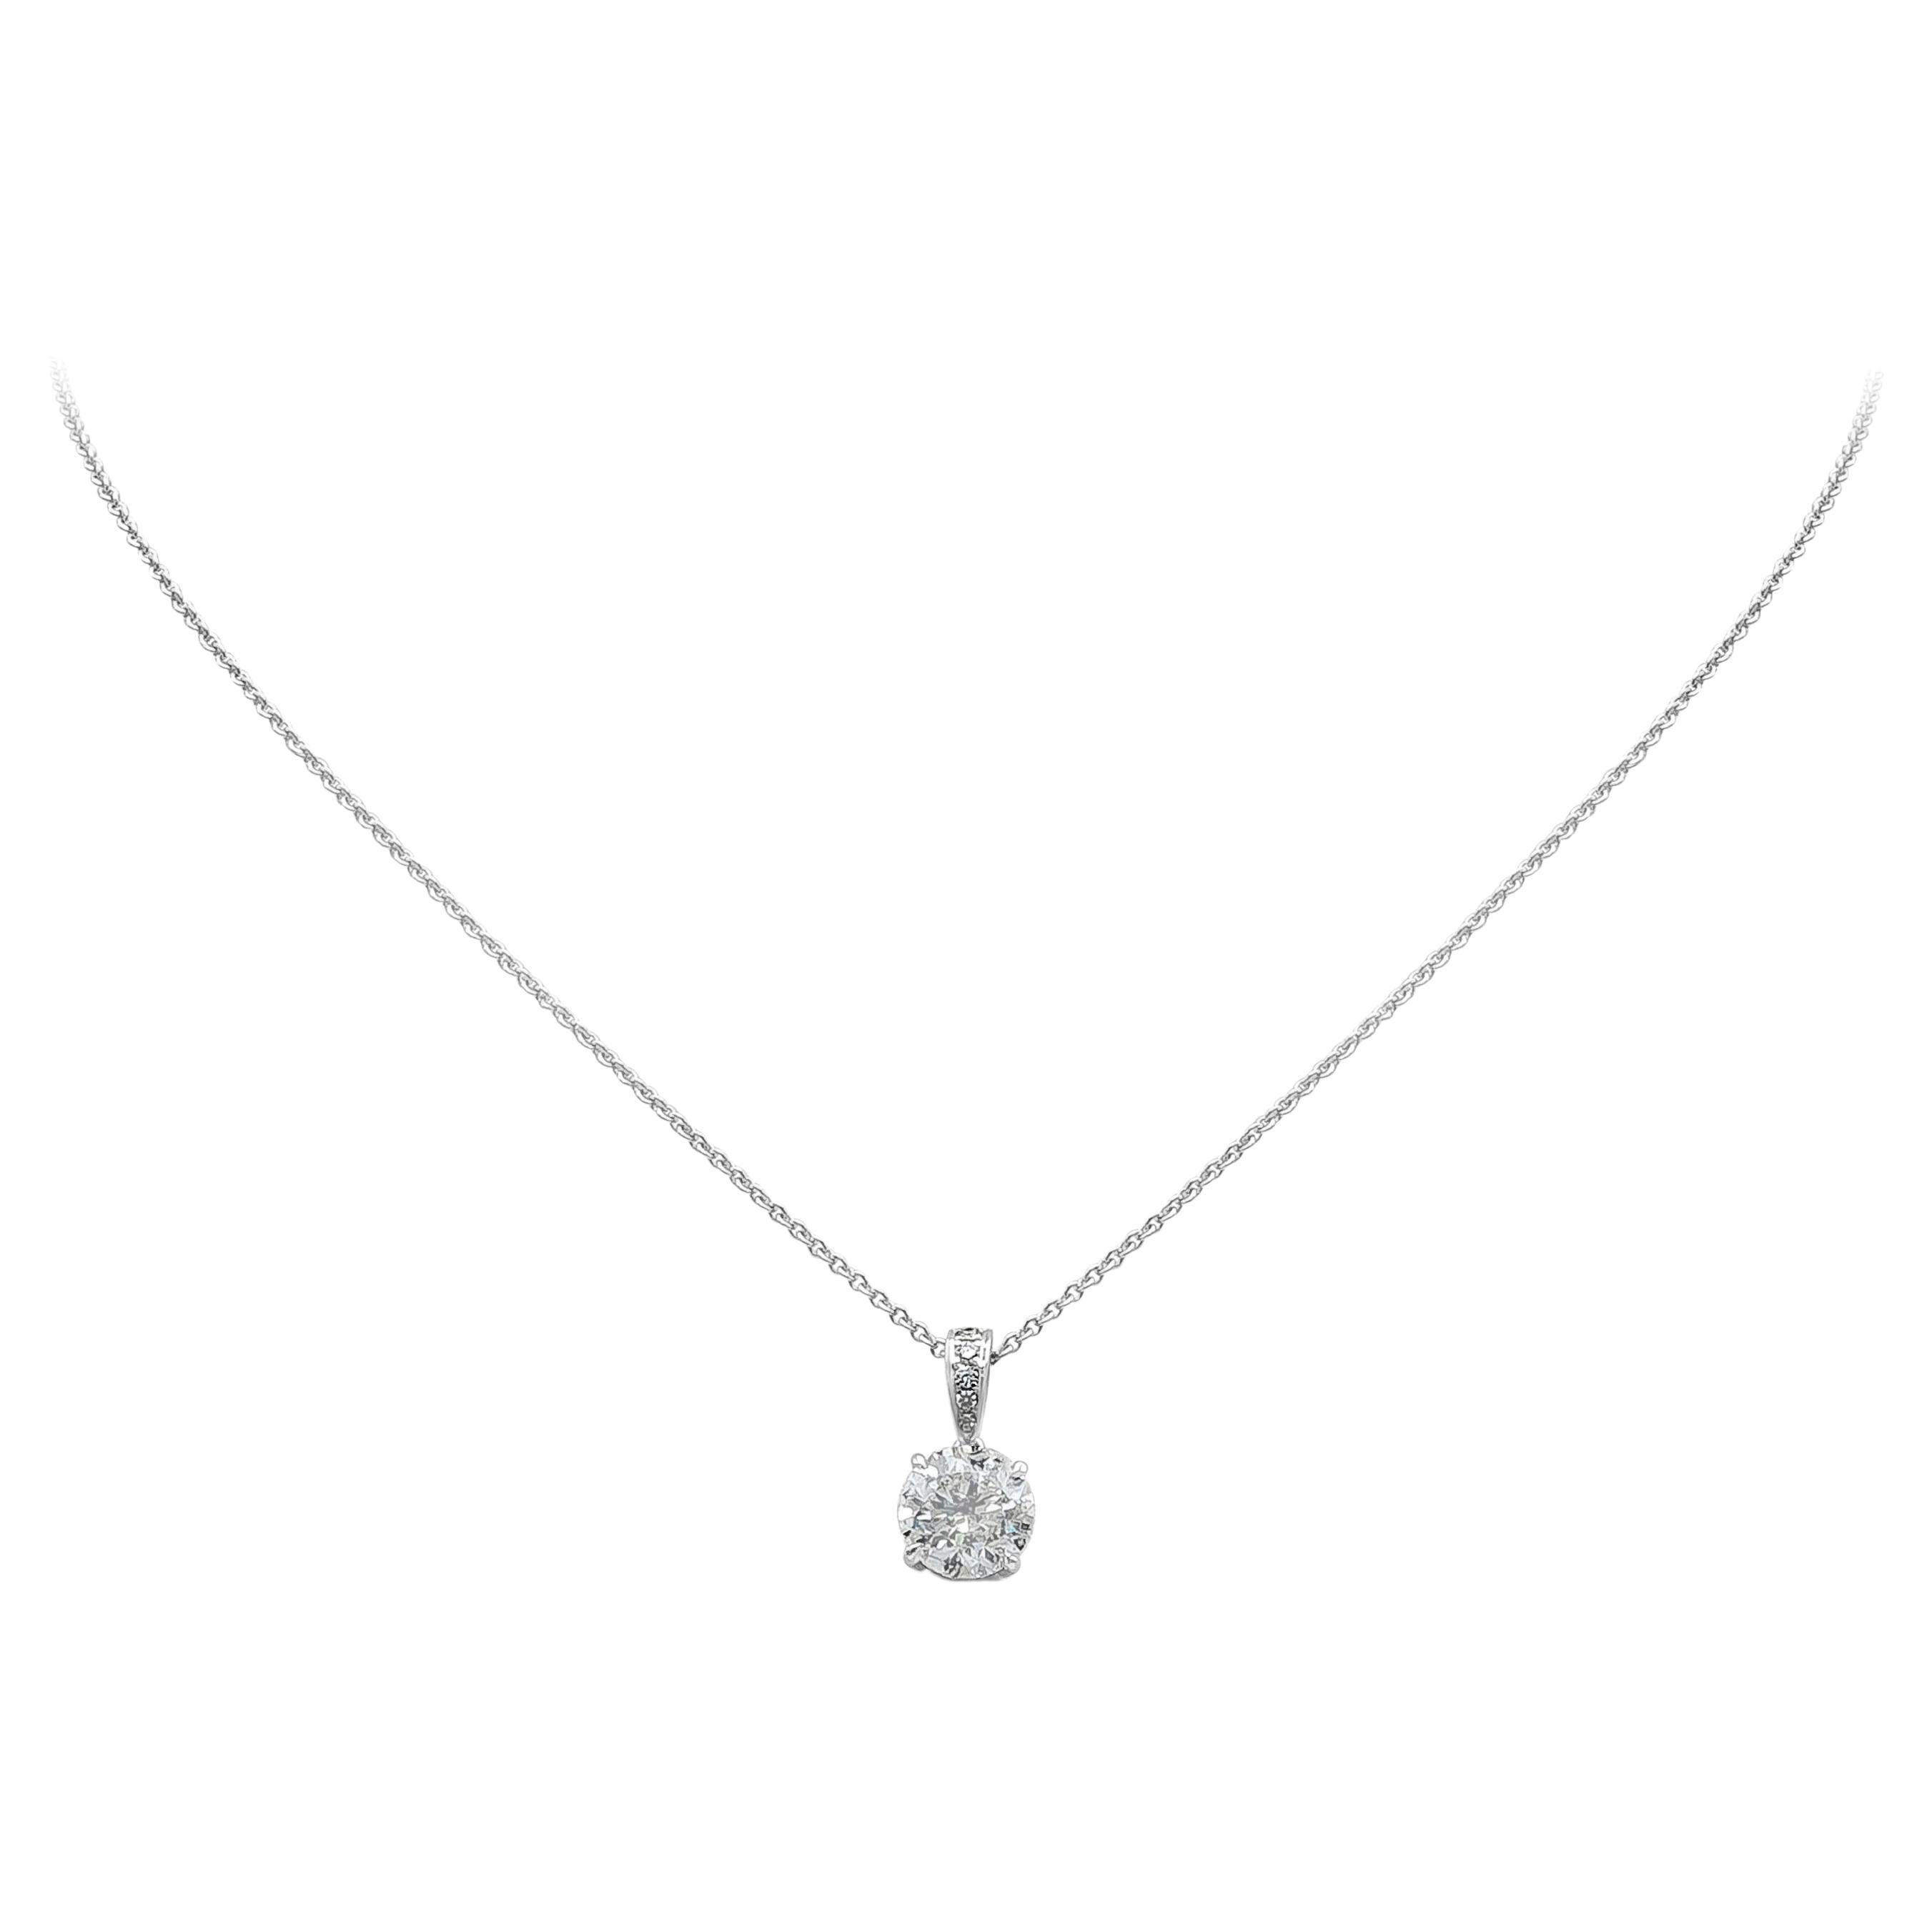 EGL Certified 2.27 Carat Brilliant Round Diamond Solitaire Pendant Necklace